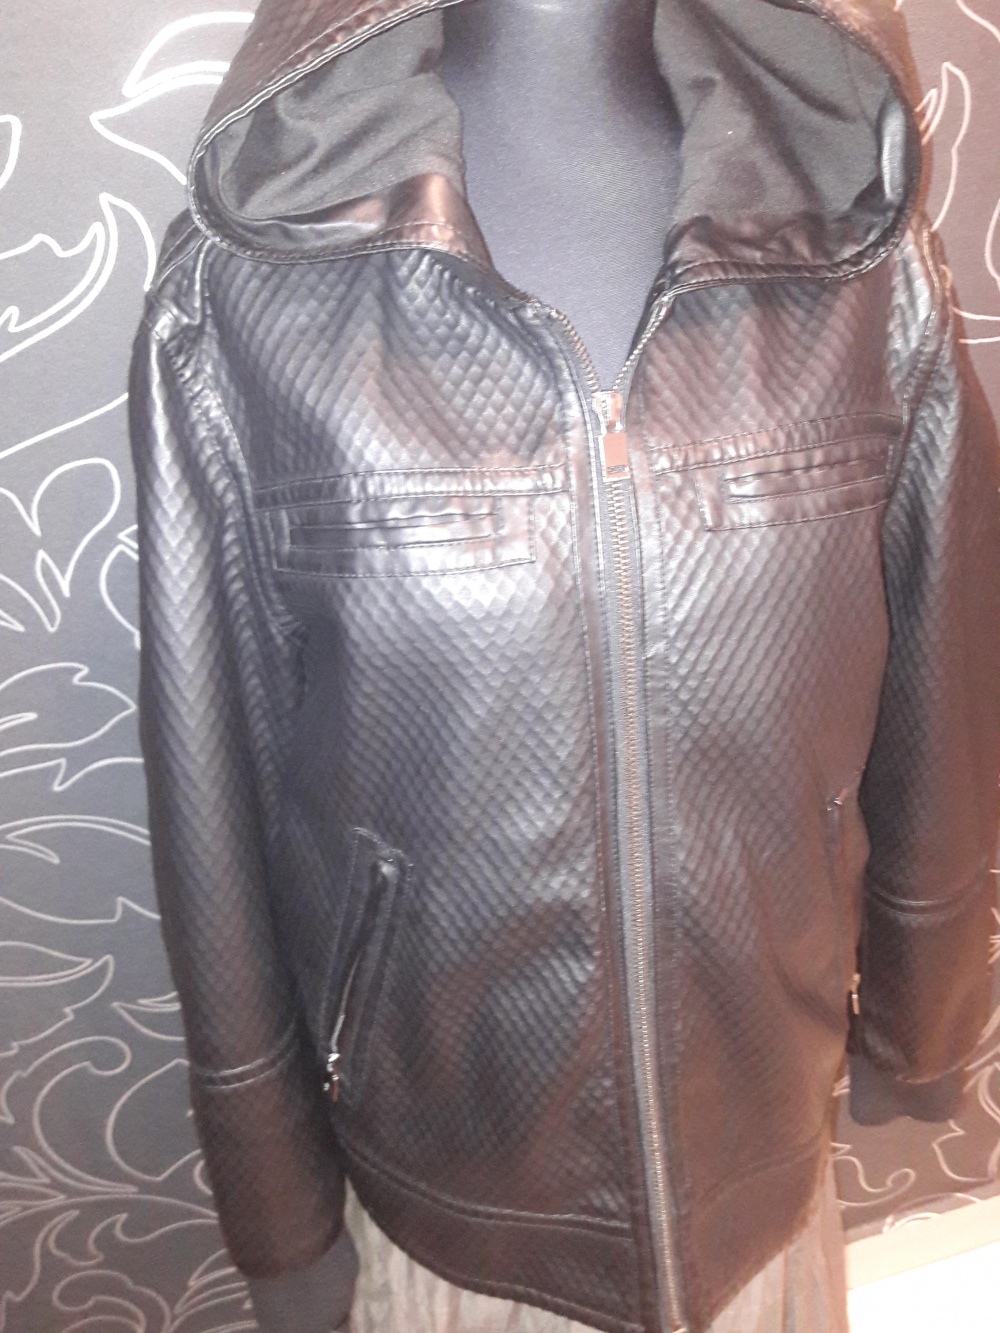 Zara Man: стильная мужская куртка, 52